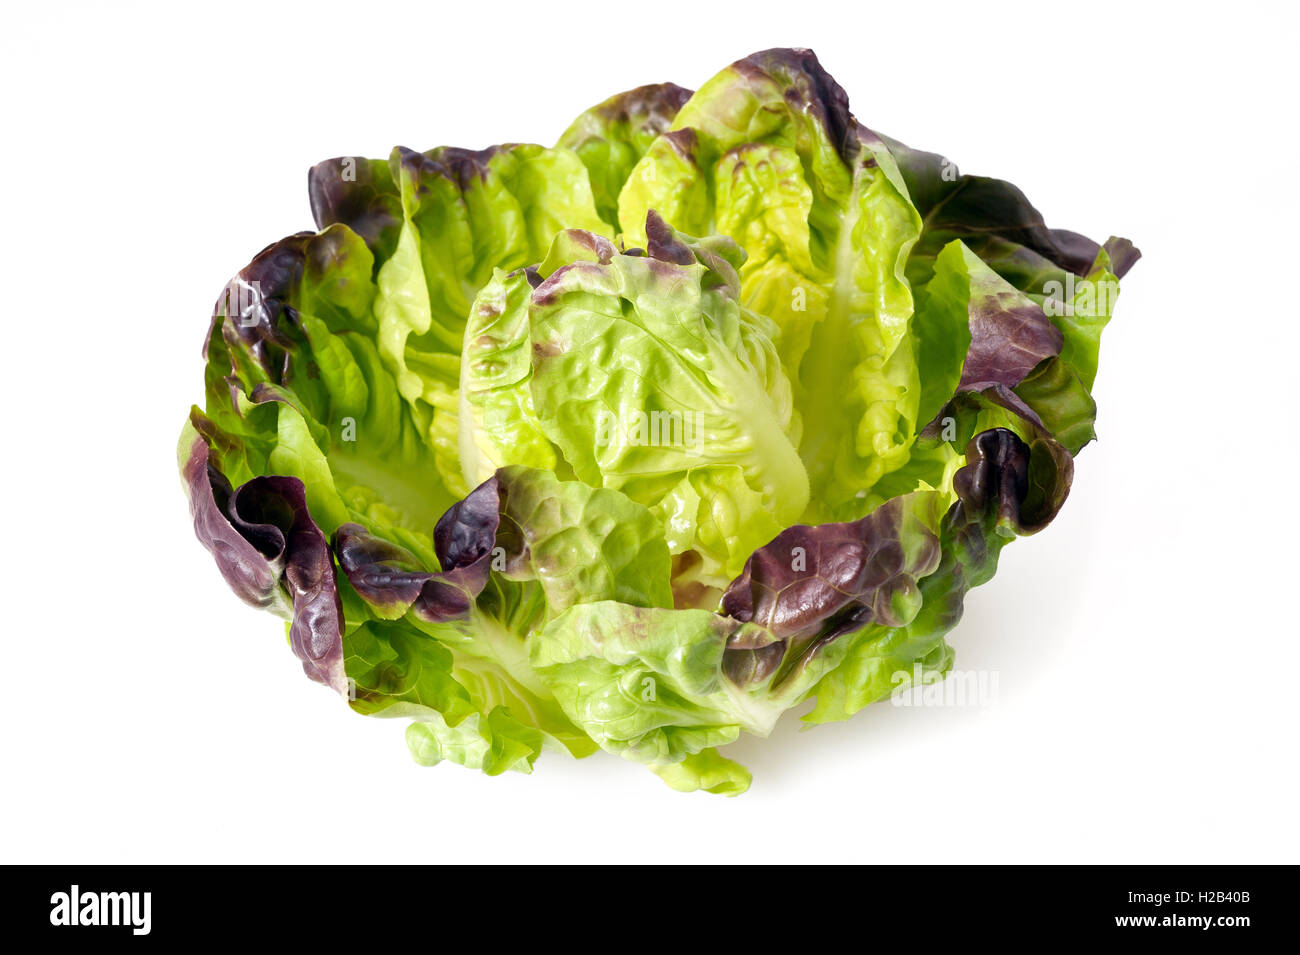 A head of red bibb lettuce Stock Photo